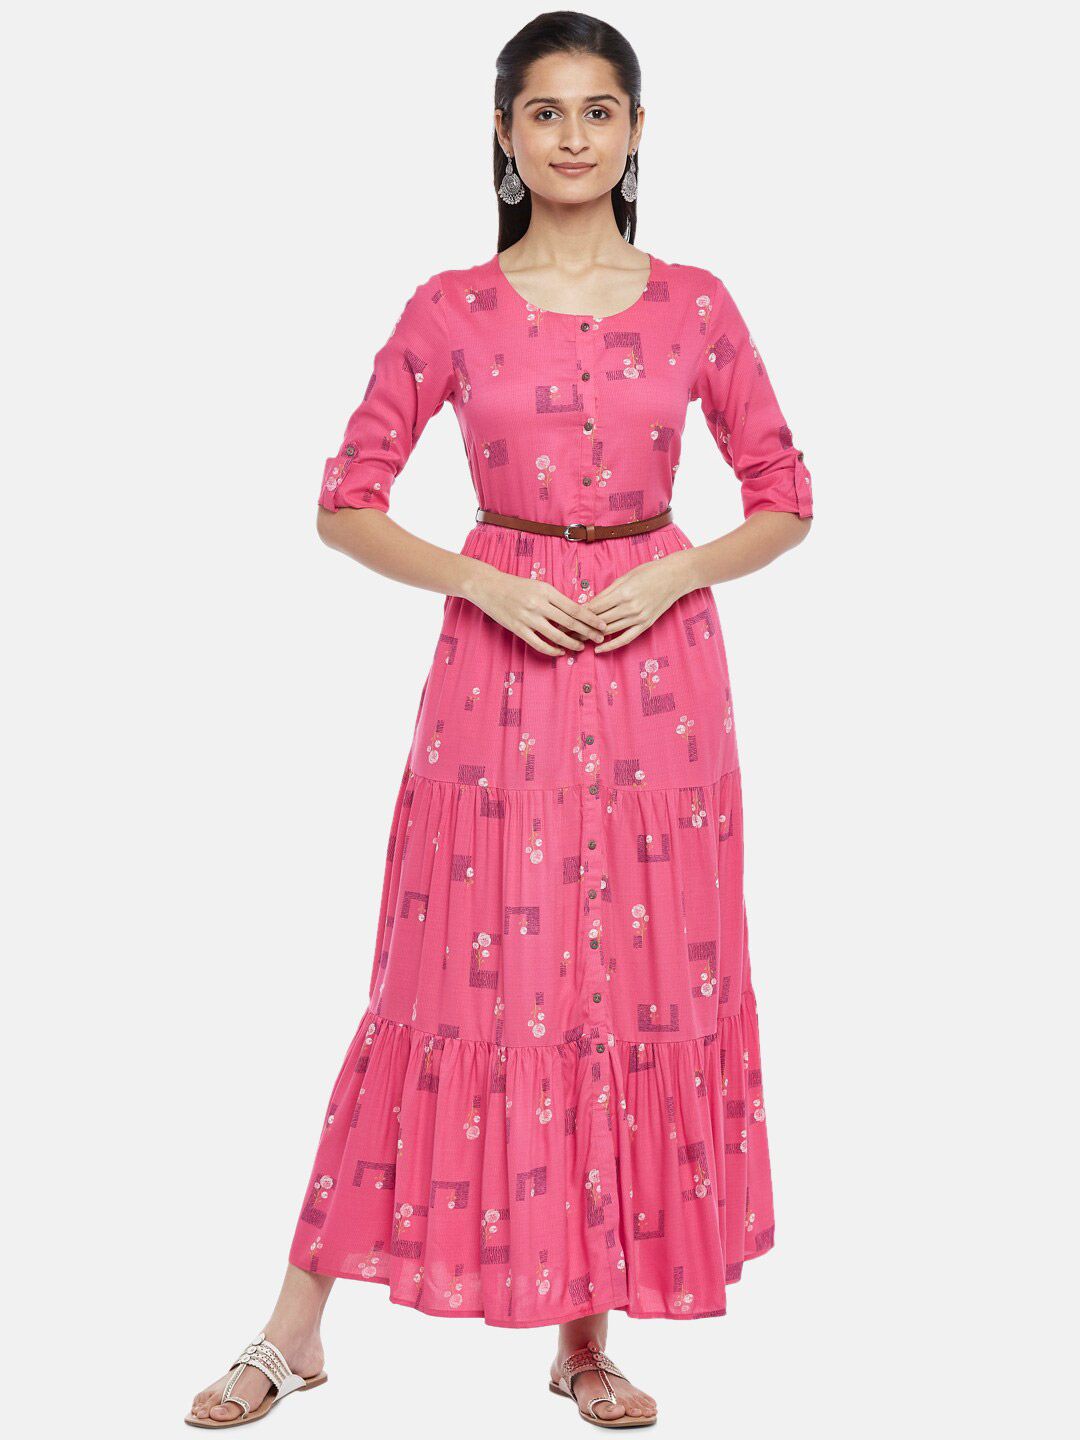 AKKRITI BY PANTALOONS Women Fuchsia Floral Printed Maxi Dress Price in India